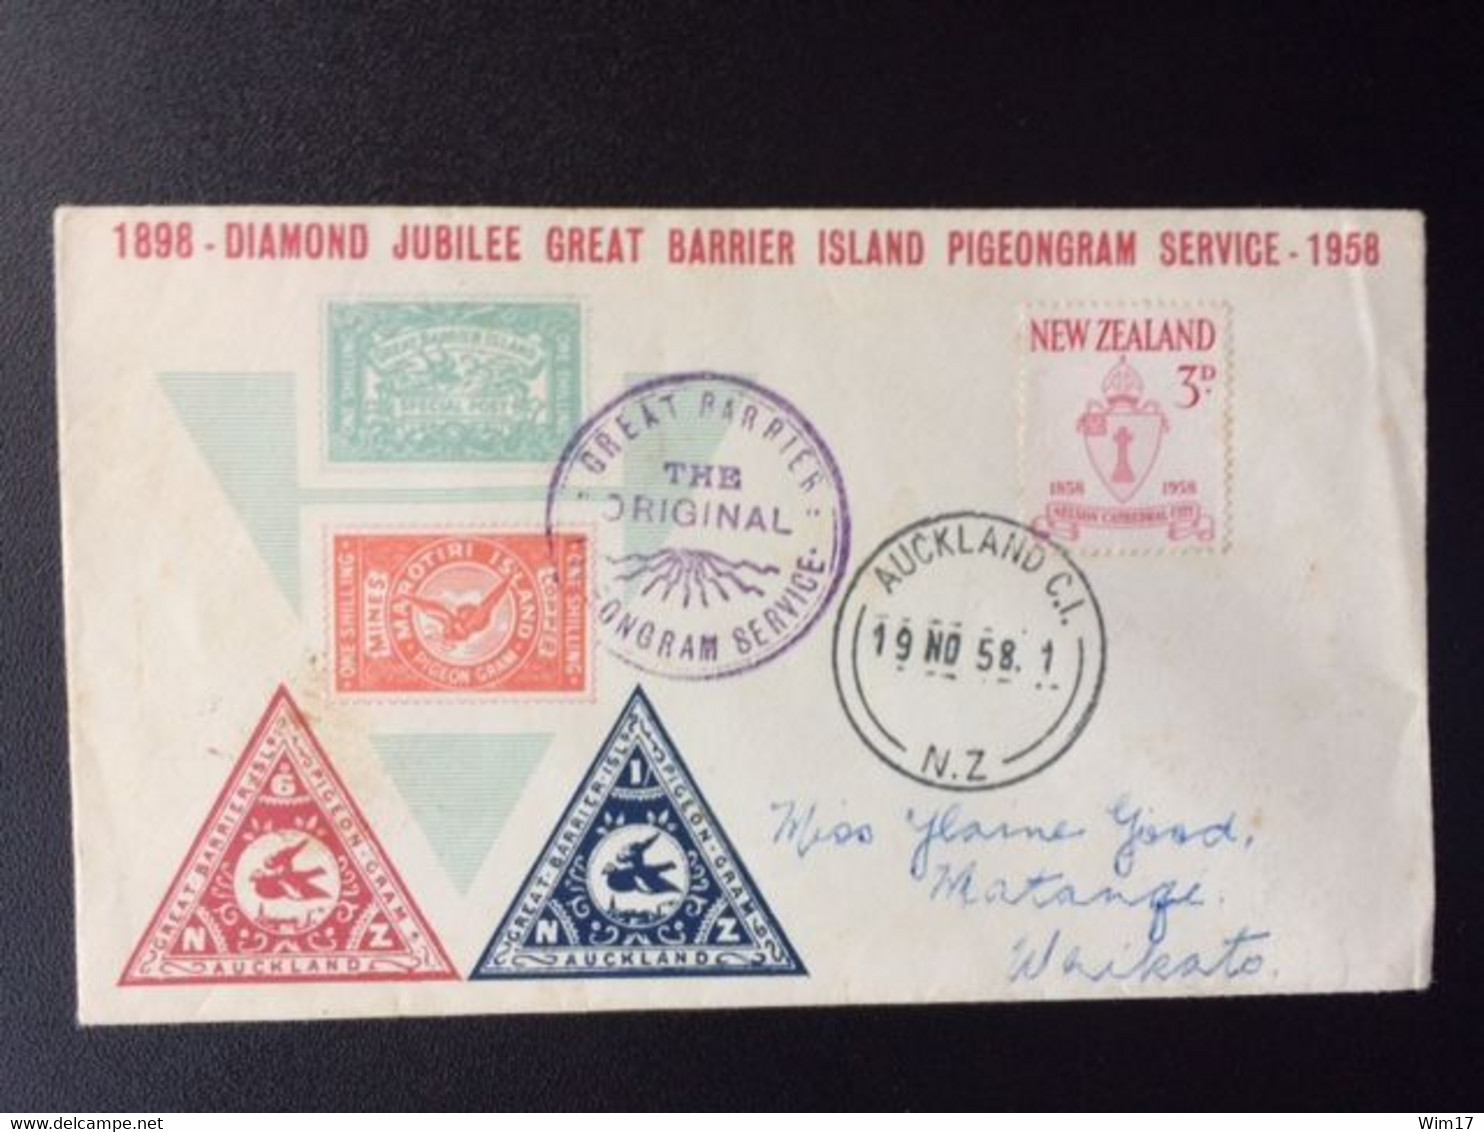 NEW ZEALAND 1958 GREAT BARRIER ISLAND PIGEONGRAM SERVICE 19-11-1958 TO WAIKATO NIEUW ZEELAND - Lettres & Documents